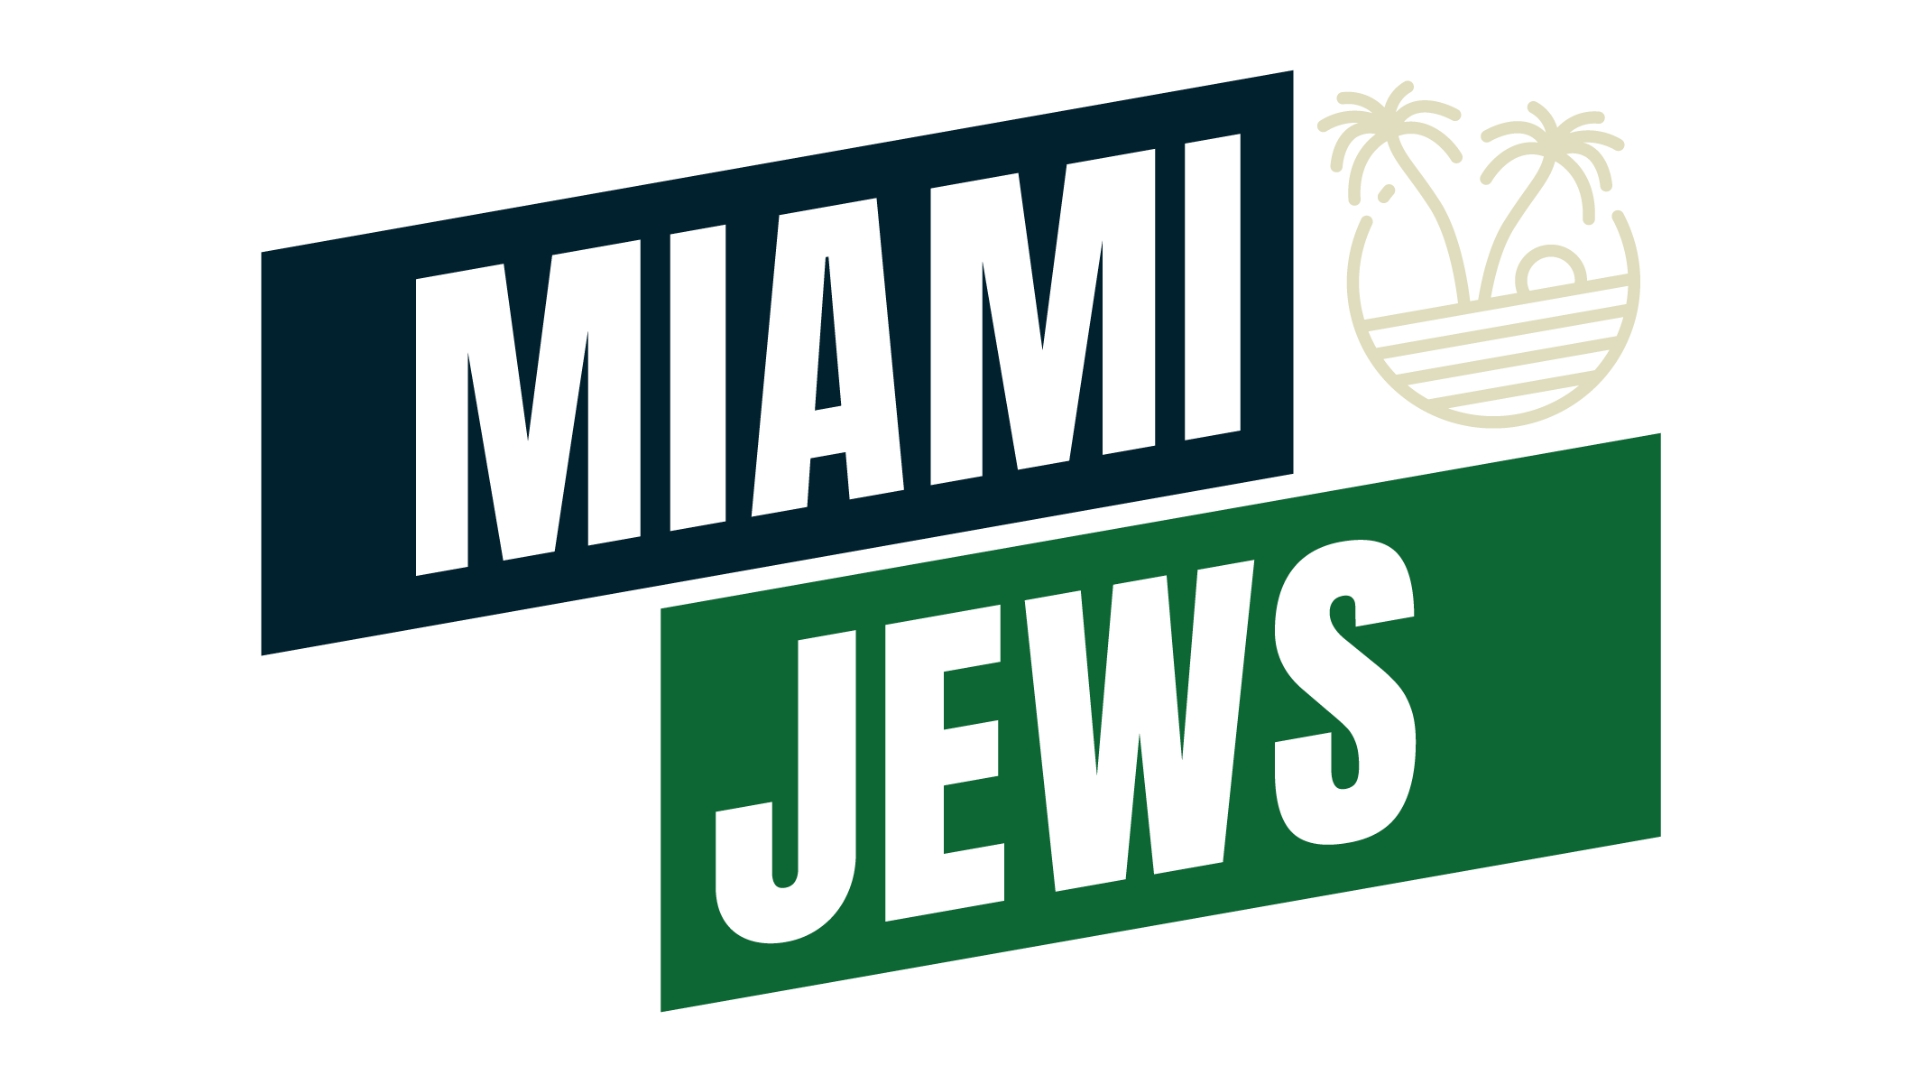 logo for Miami Jews